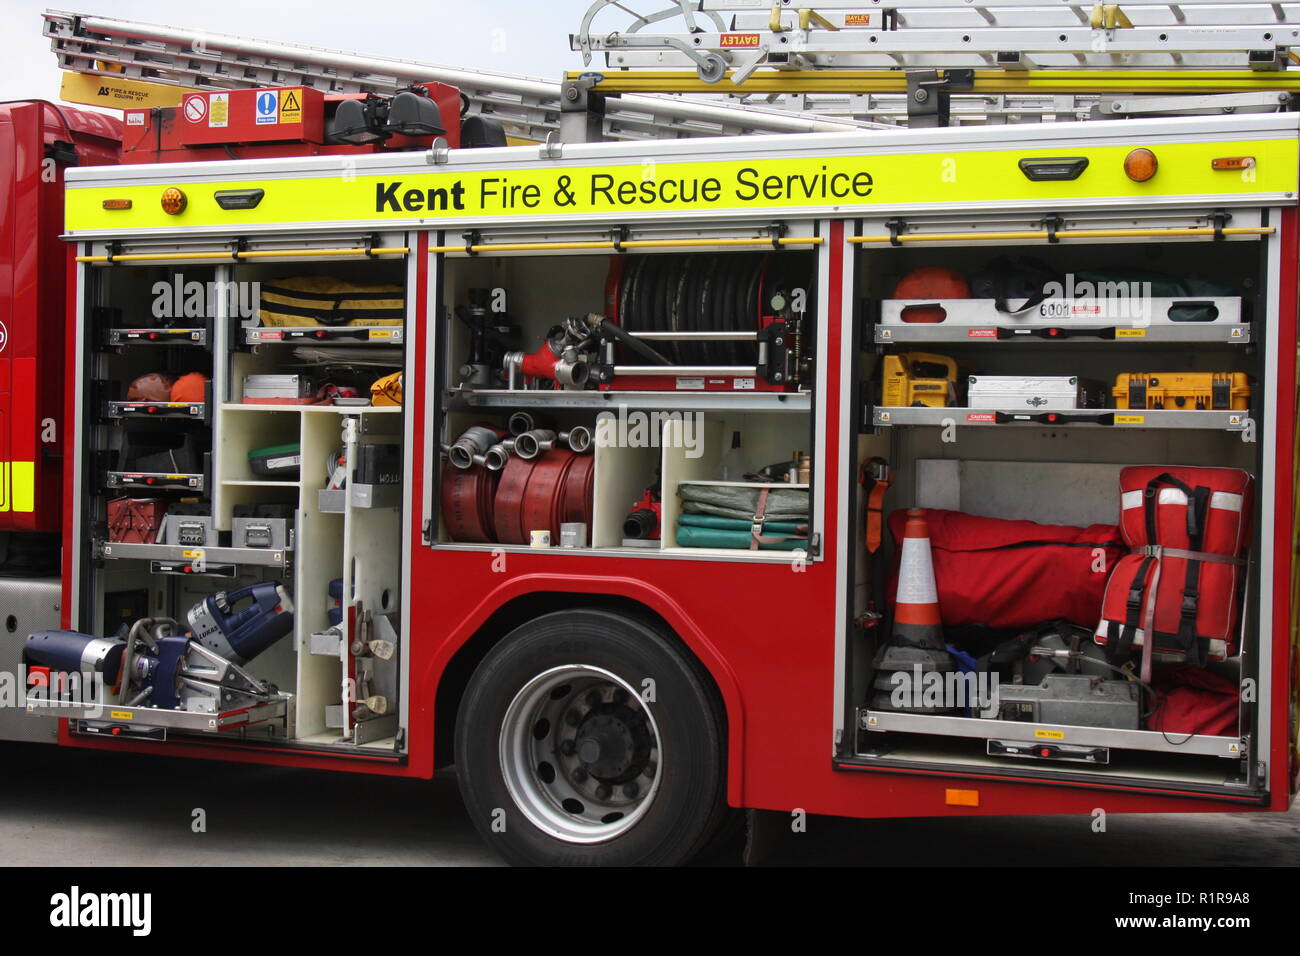 kent-fire-rescue-service-fire-truck-close-view-of-equipment-locker-stock-photo-alamy